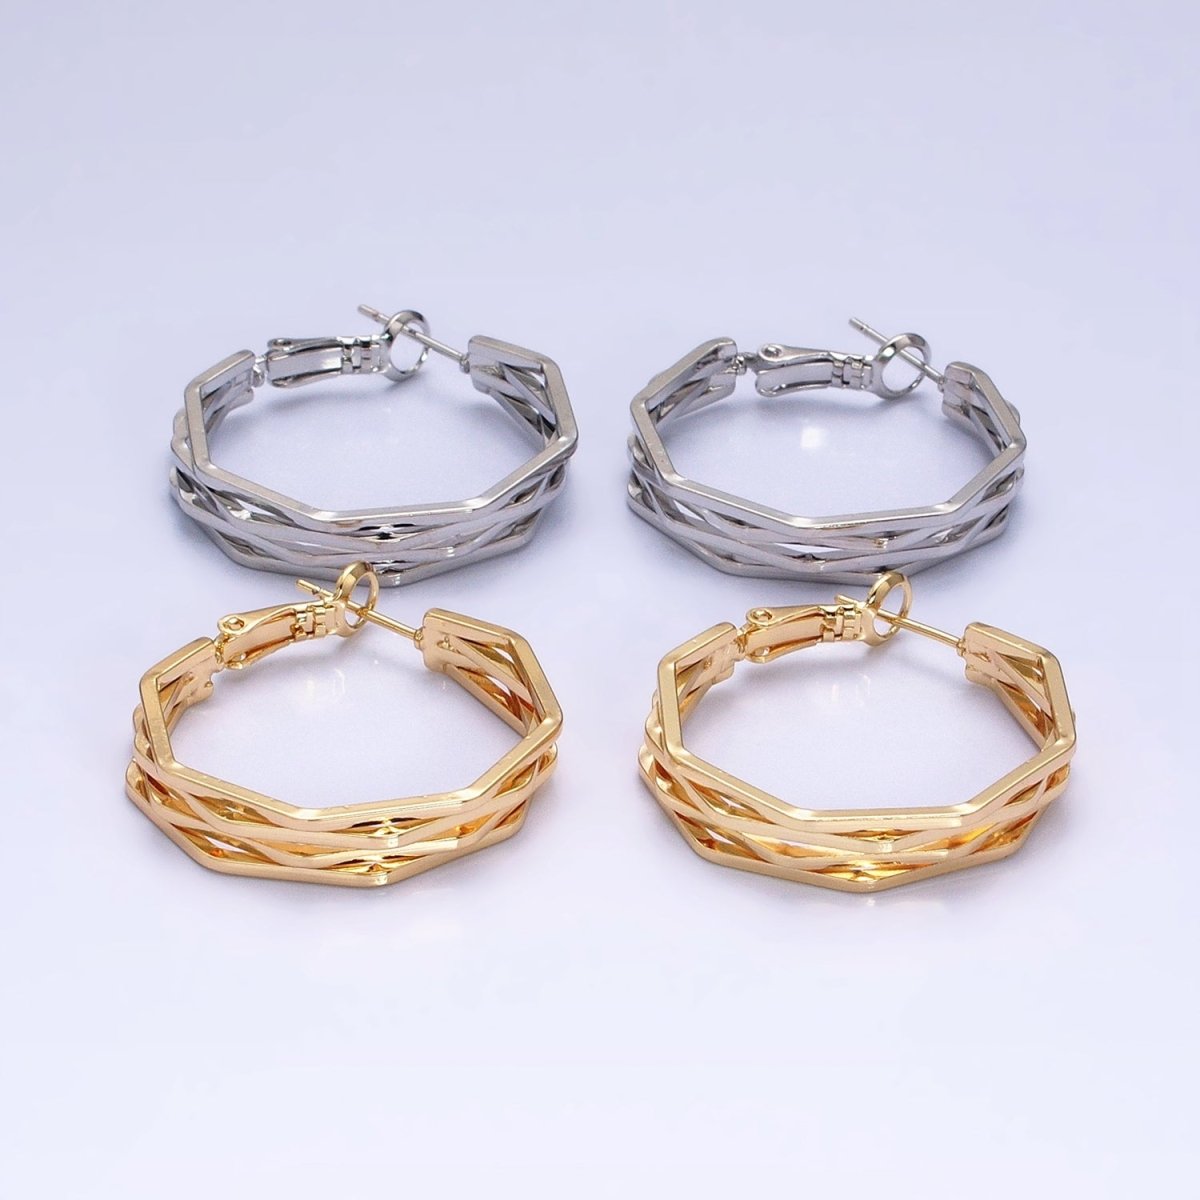 16K Gold Filled 30mm Hexagonal Multiple Band Hinge Hoop Earrings in Gold & Silver | AE037 AE038 - DLUXCA